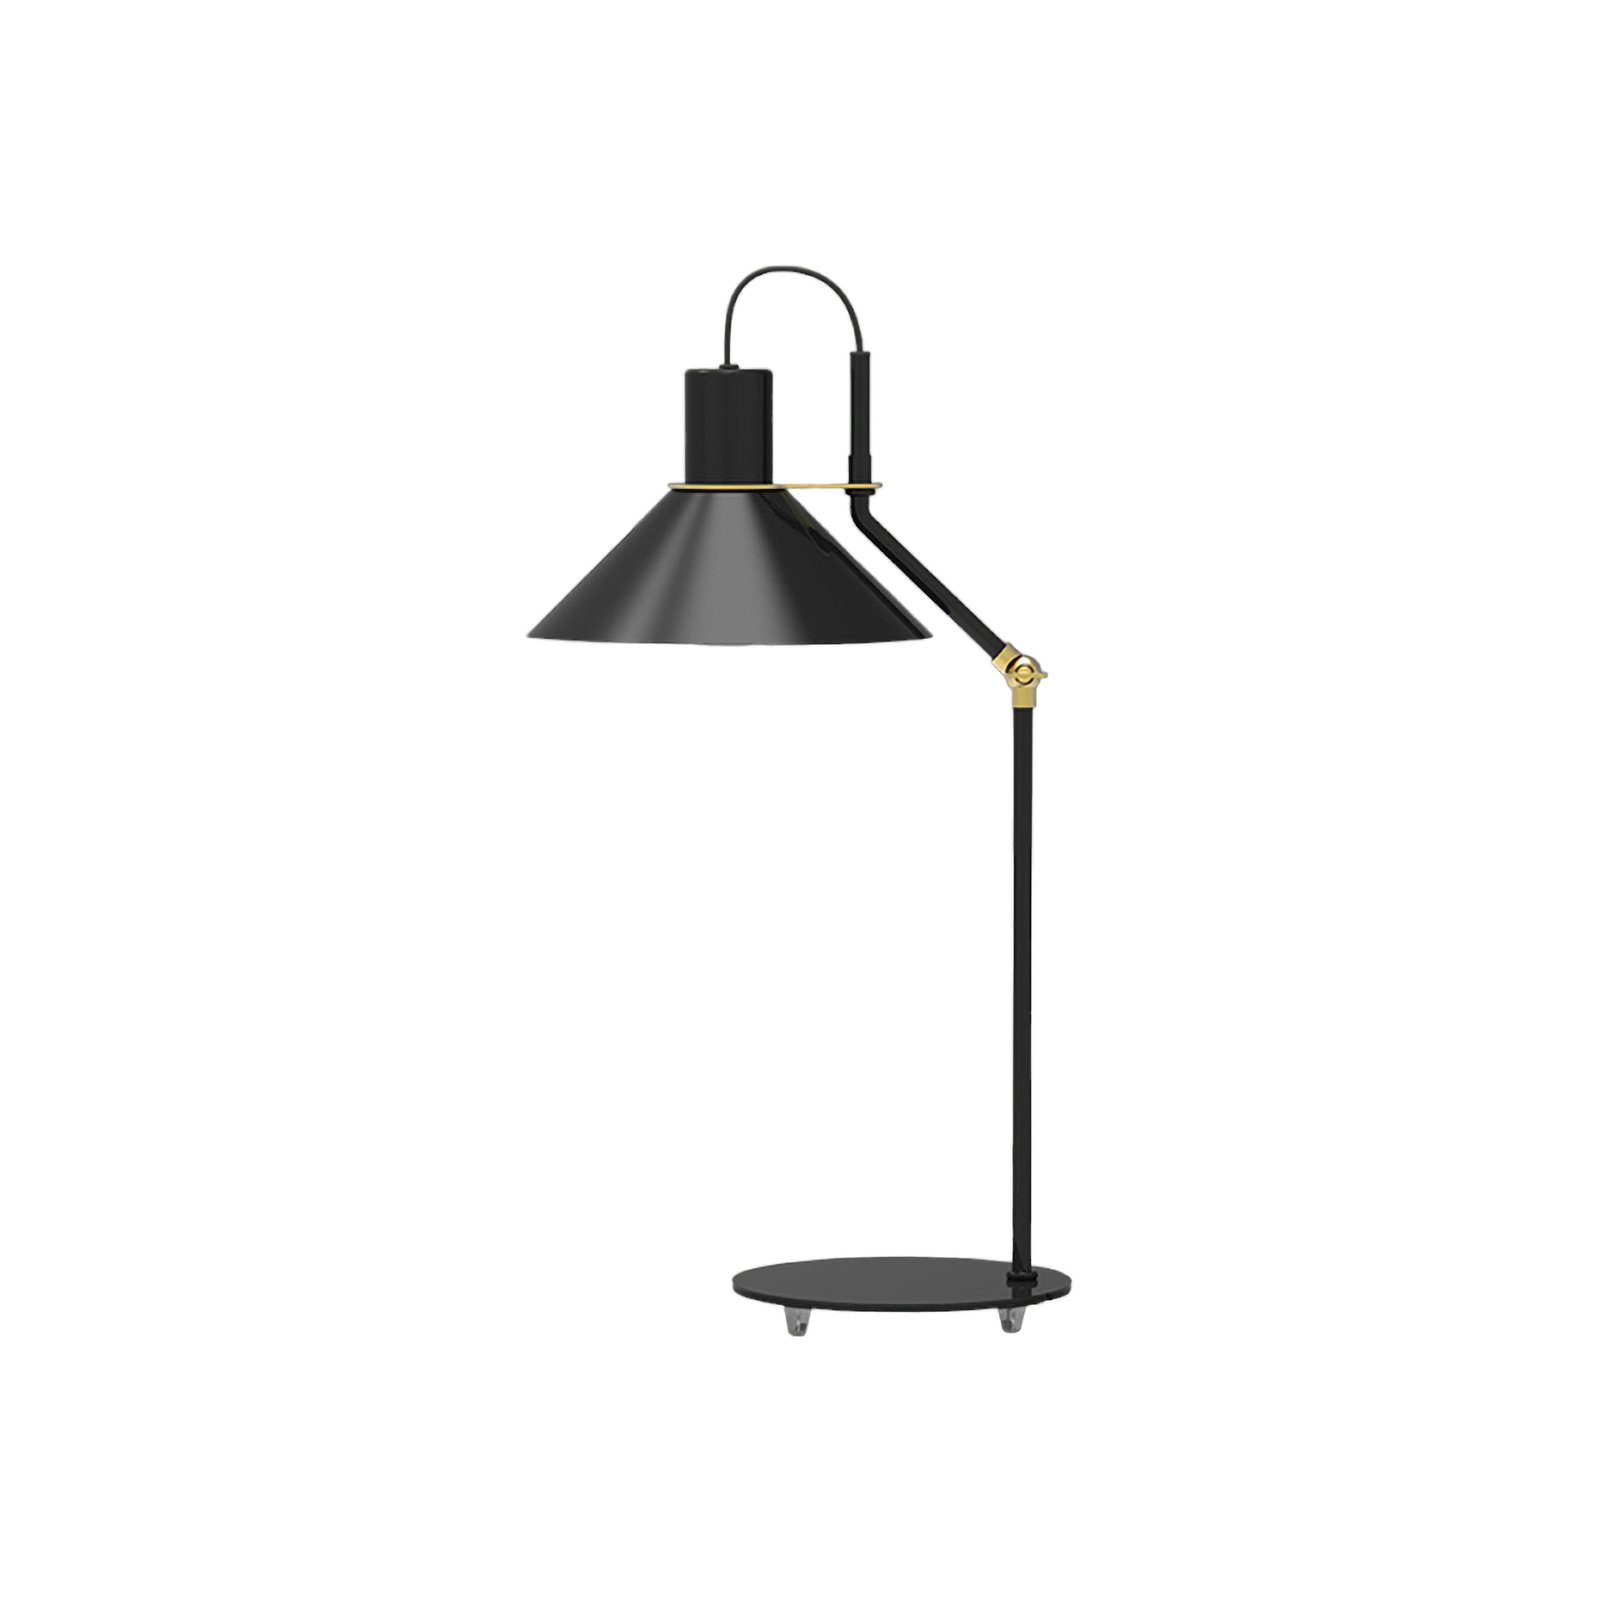 Aluminor Zinga lampe de table, noire, laiton